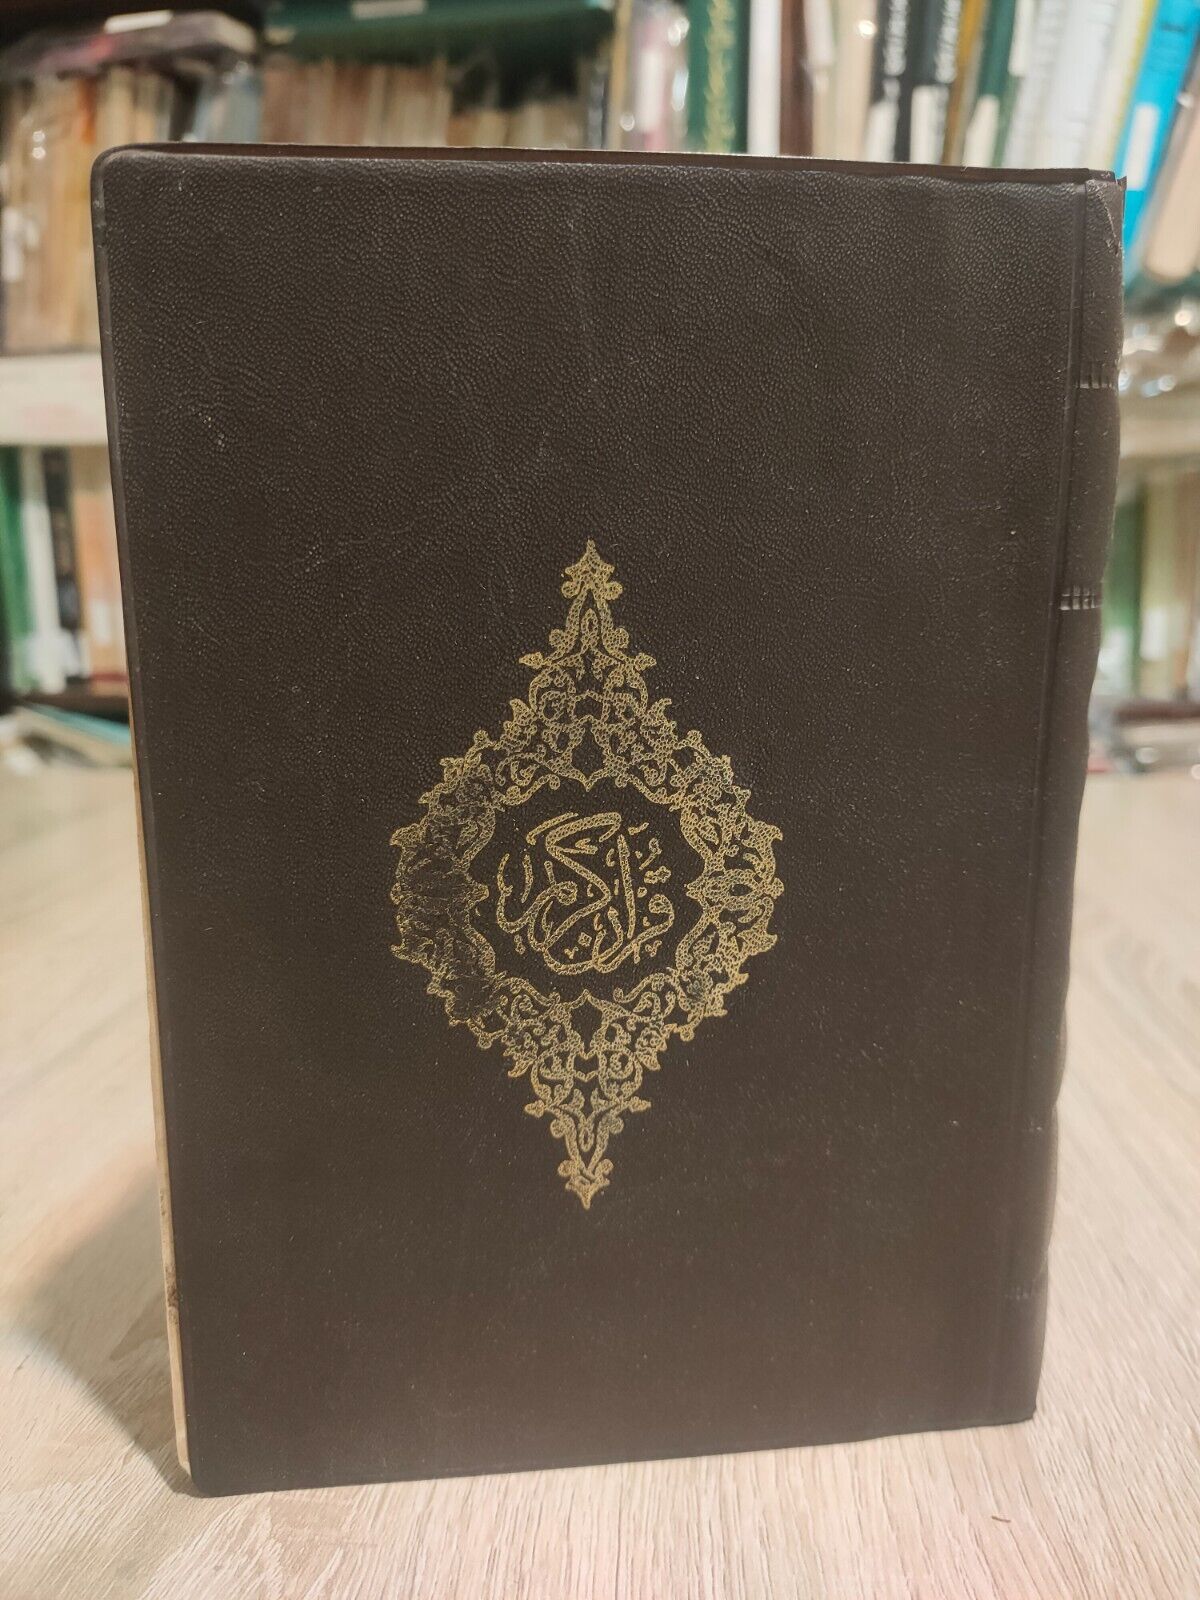 1988 Vintage Holy Book Arabic Text Koran القرآن الكريم مصحف الازهر الشريف